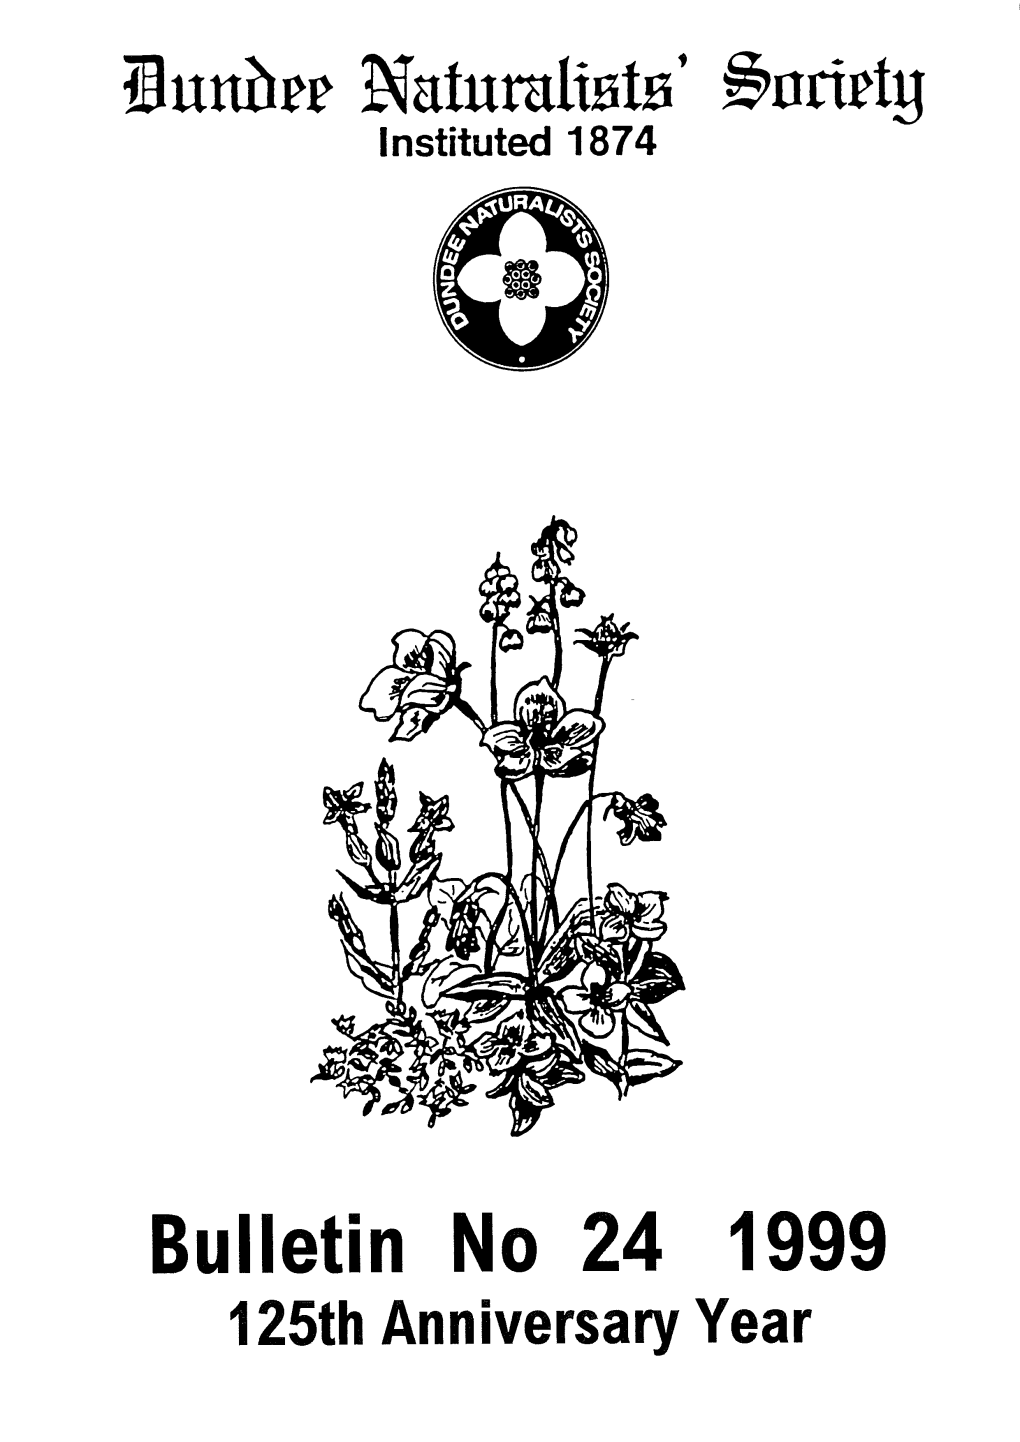 Annual Bulletin 24 – 1999